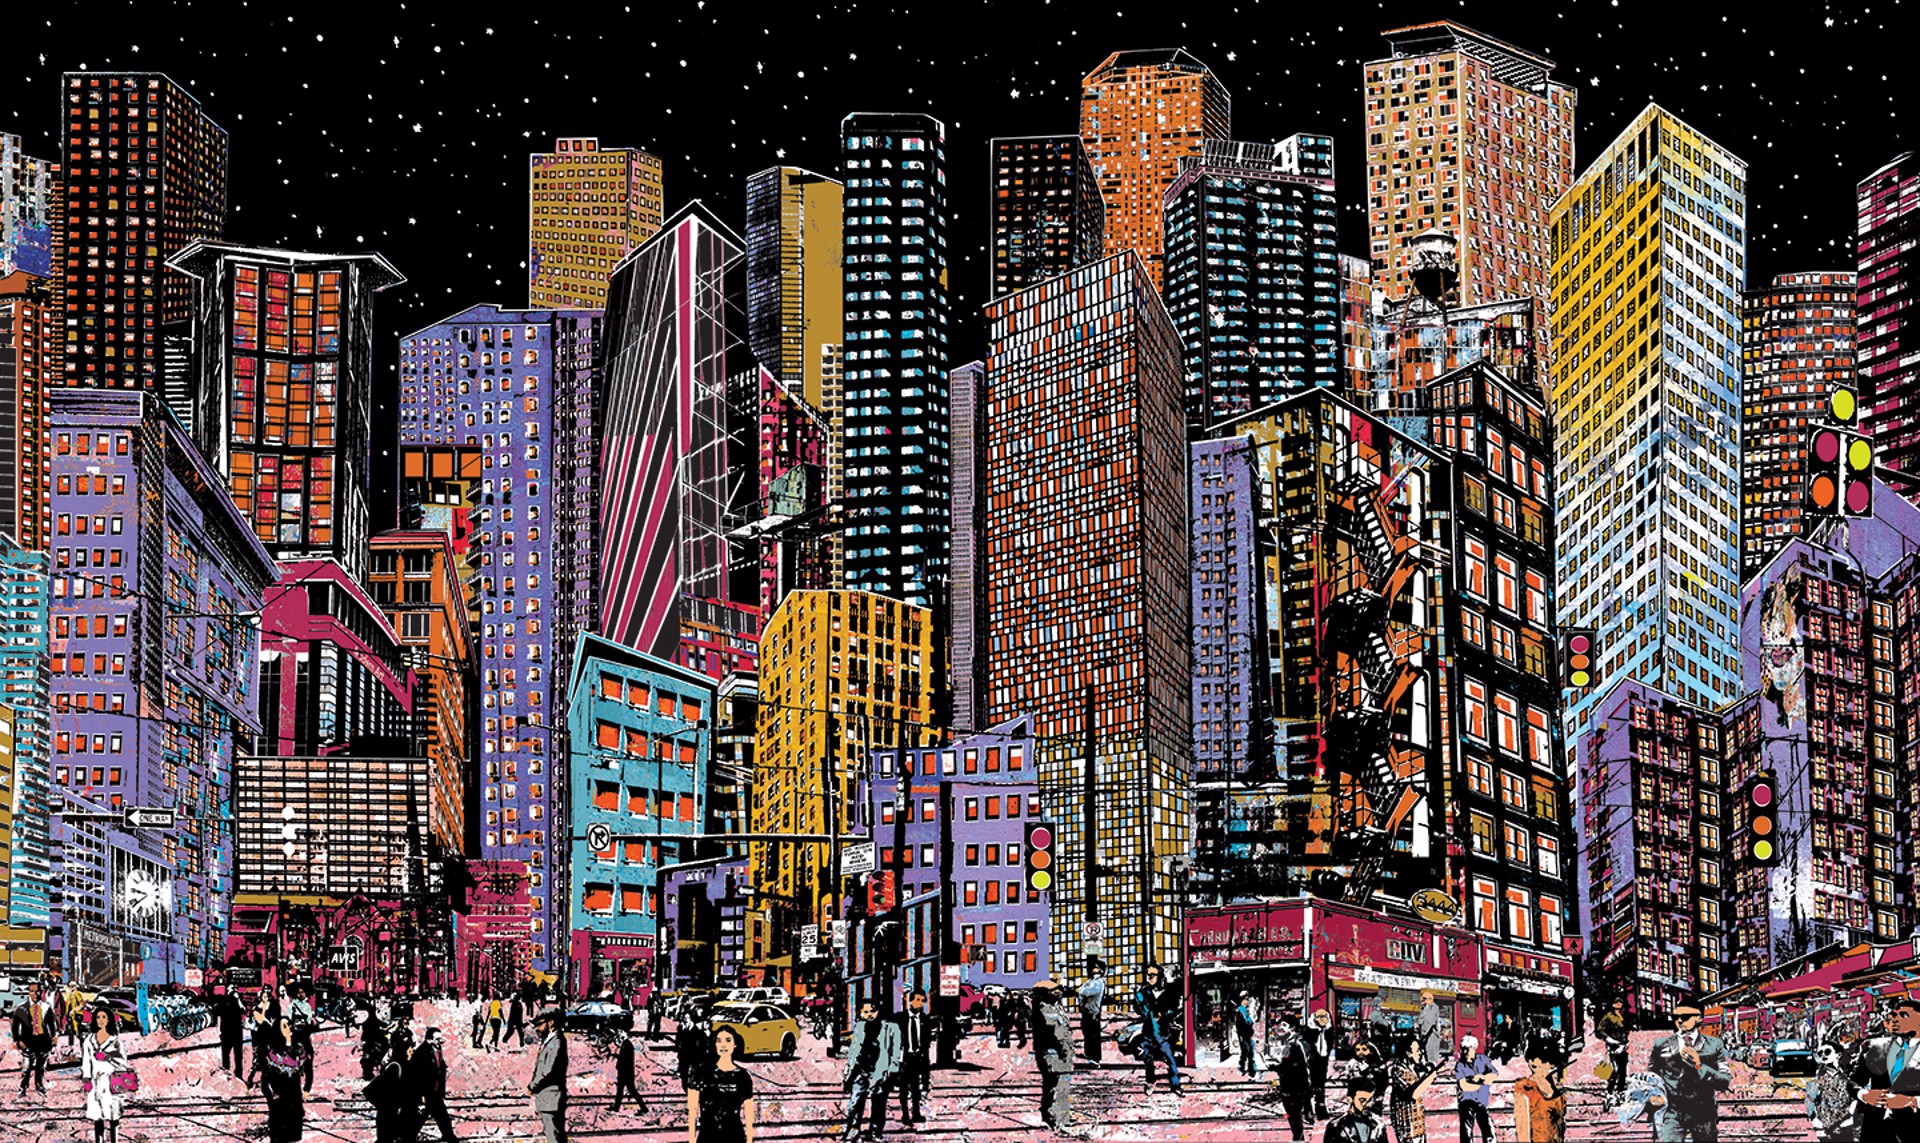 New Big City by Daryl Thetford